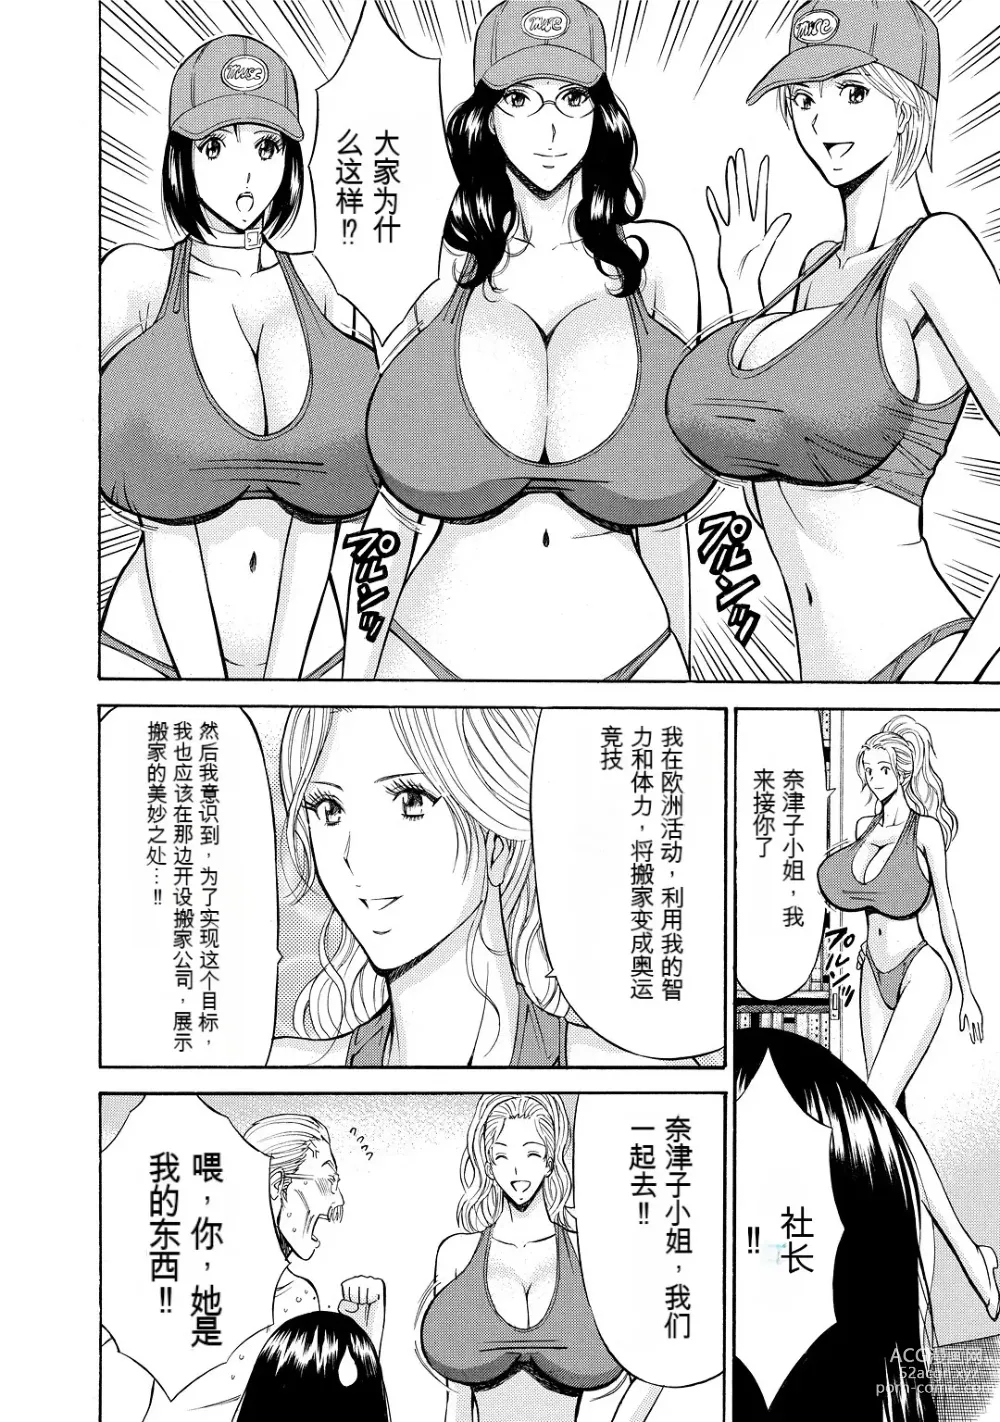 Page 184 of manga Gucchun Hikkoshitai